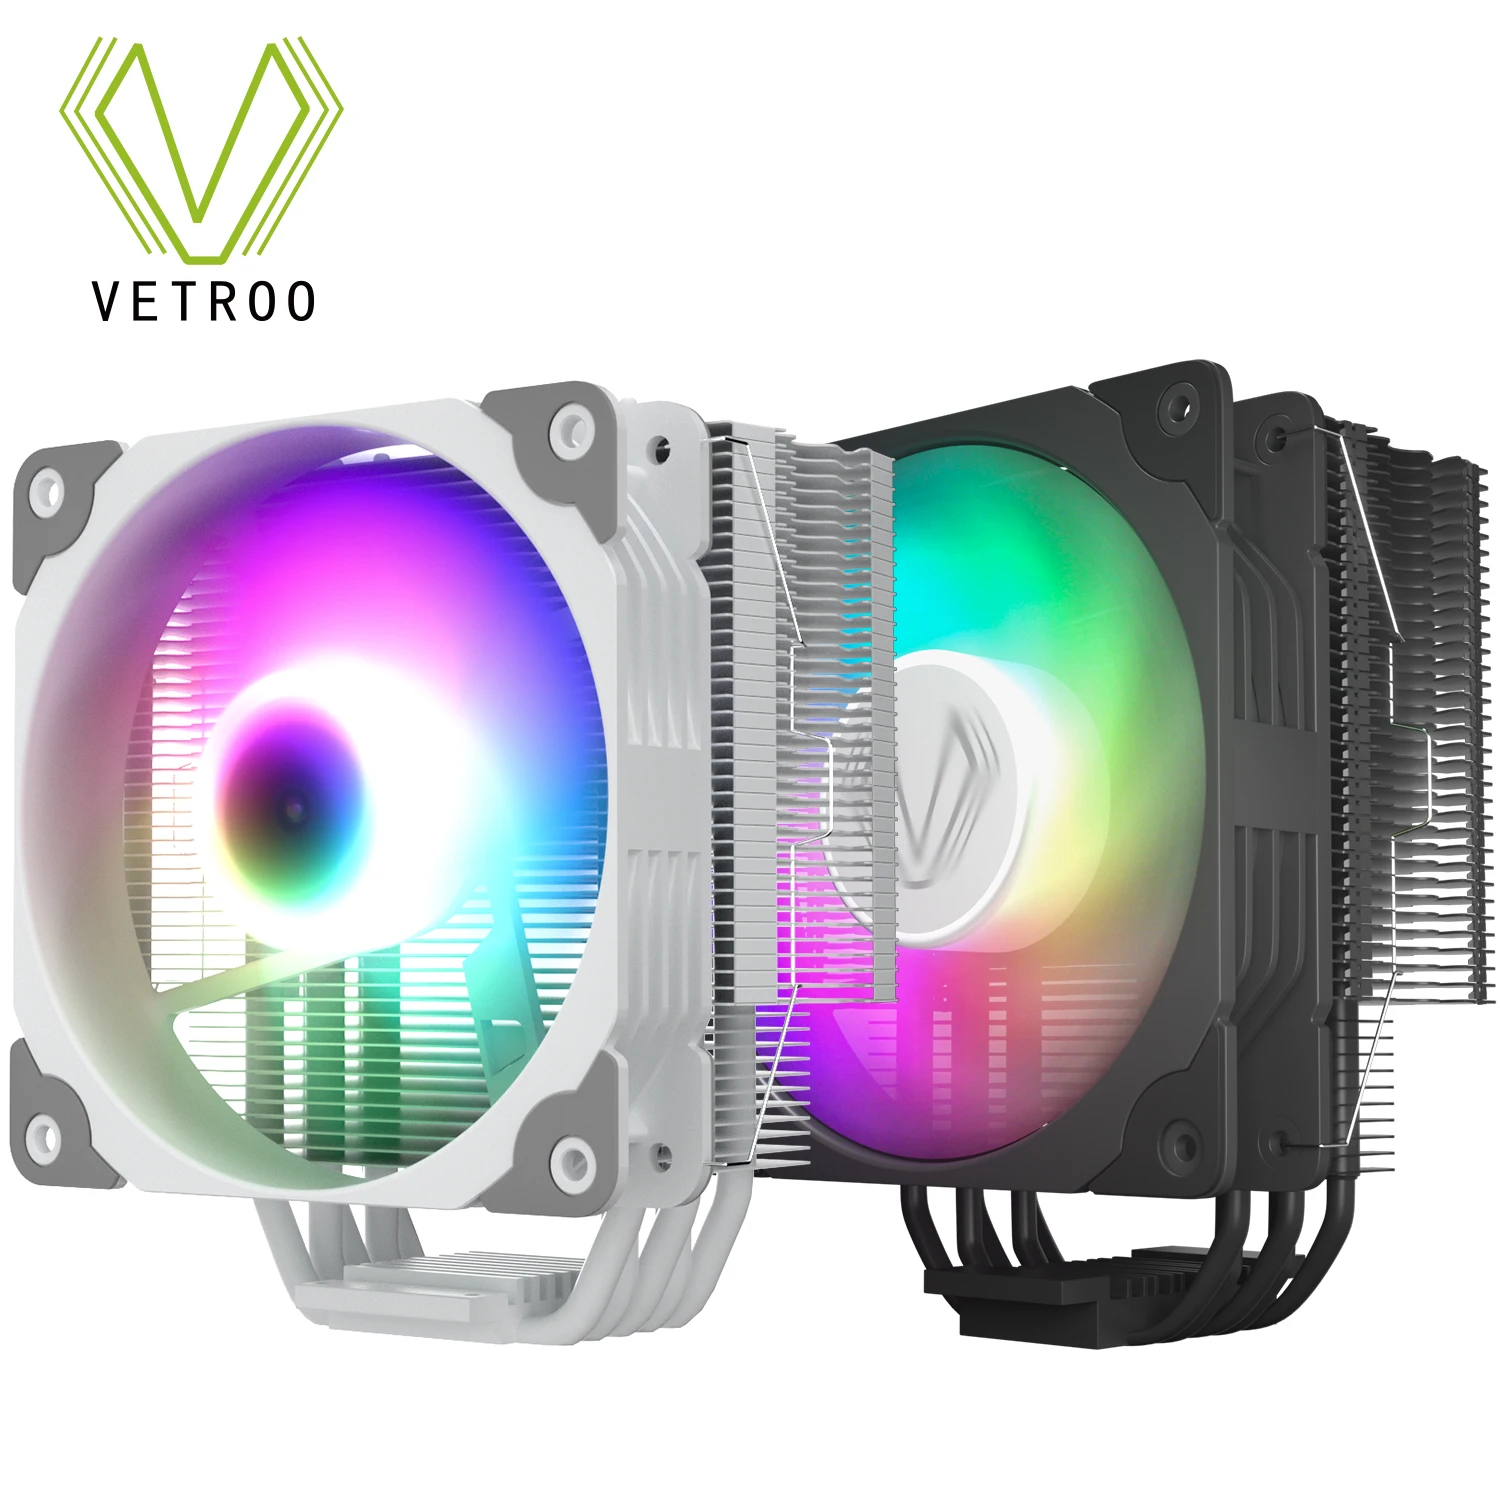 VETROO CPU Cooler Radiator 5 Heat Pipes 120mm PWM ARGB Cooling Fan For Intel LGA 1200 1366 1156 1155 1151 1150 775 AMD AM3 AM4